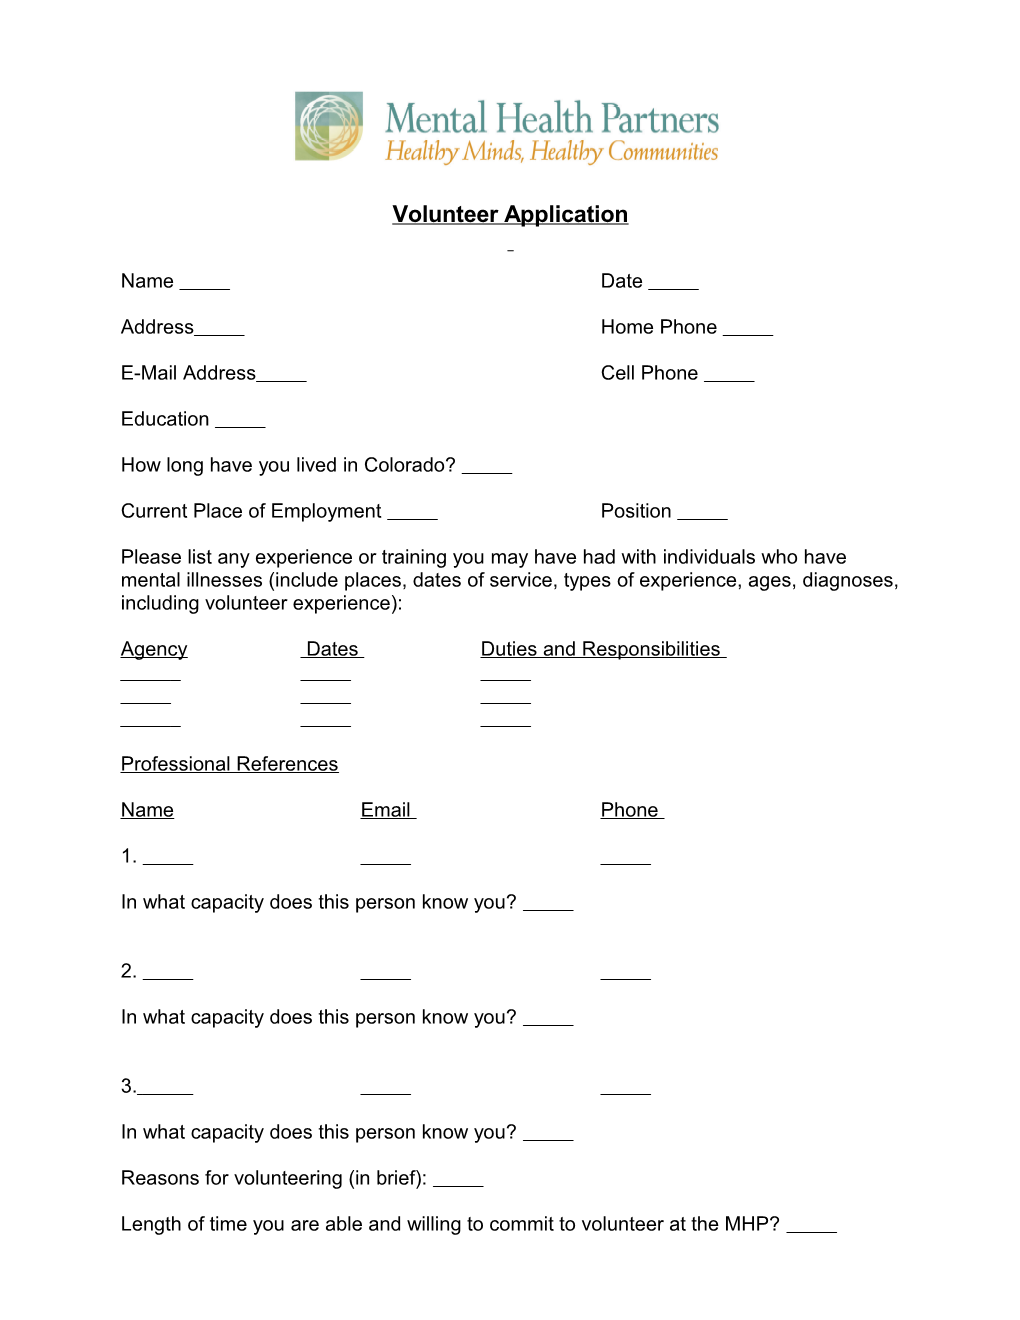 Volunteer Application s10